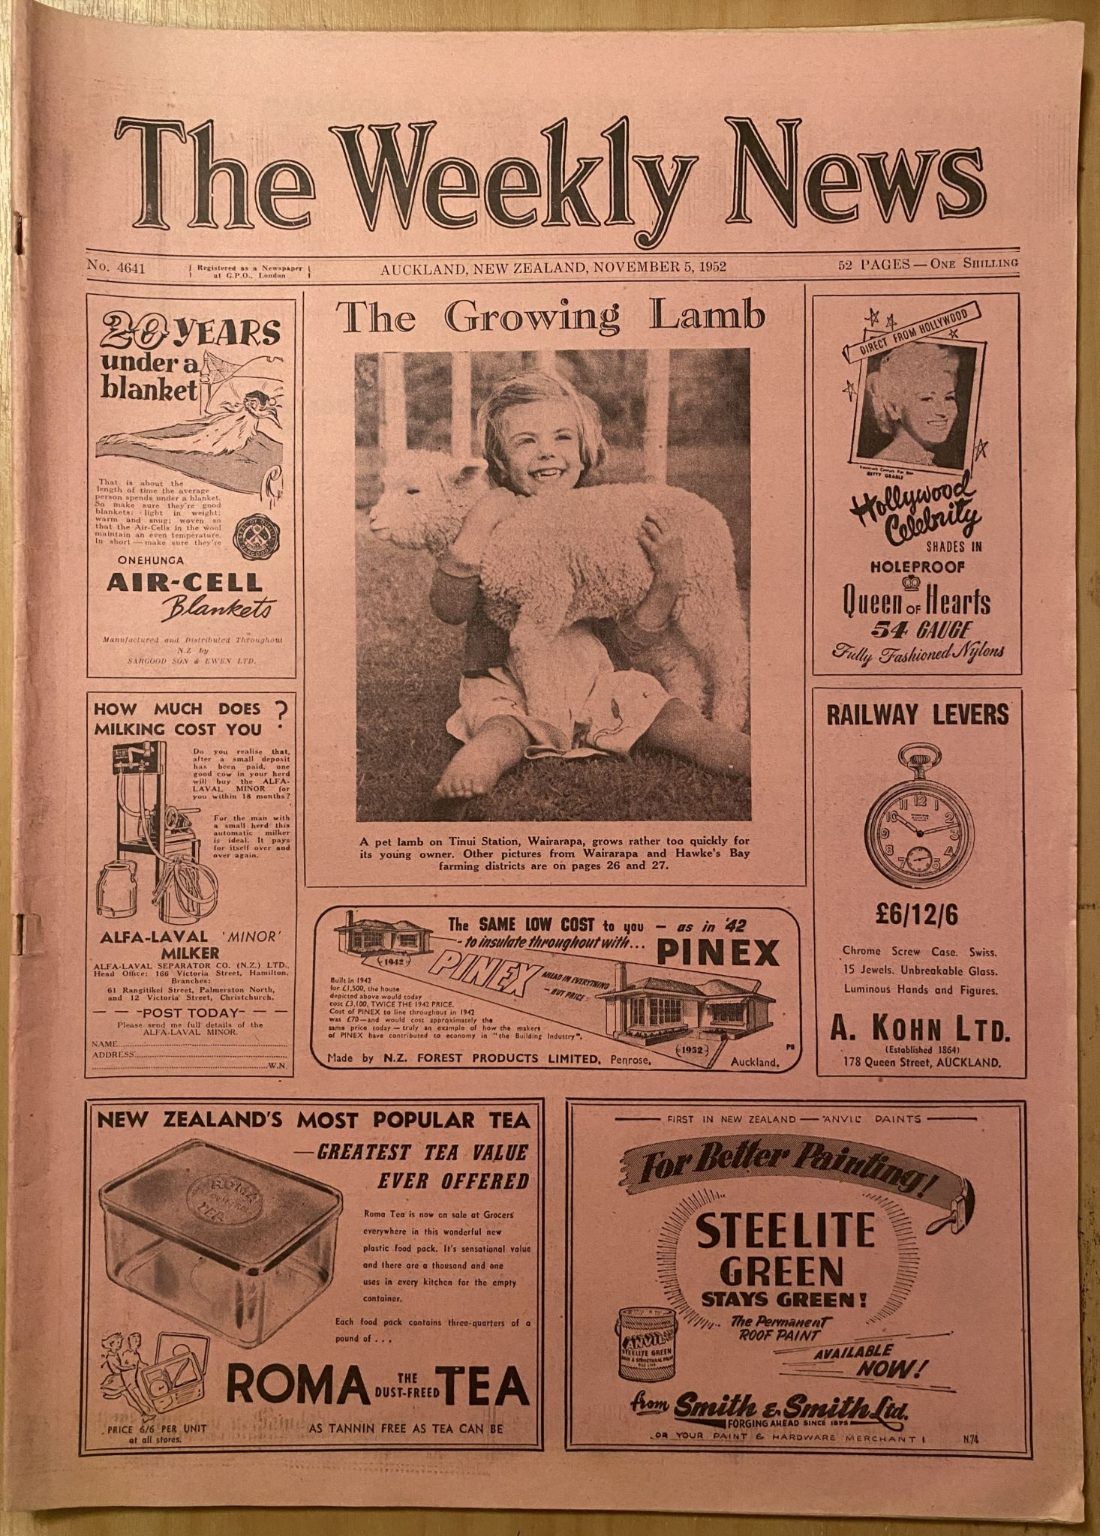 OLD NEWSPAPER: The Weekly News - No. 4641, 5 November 1952